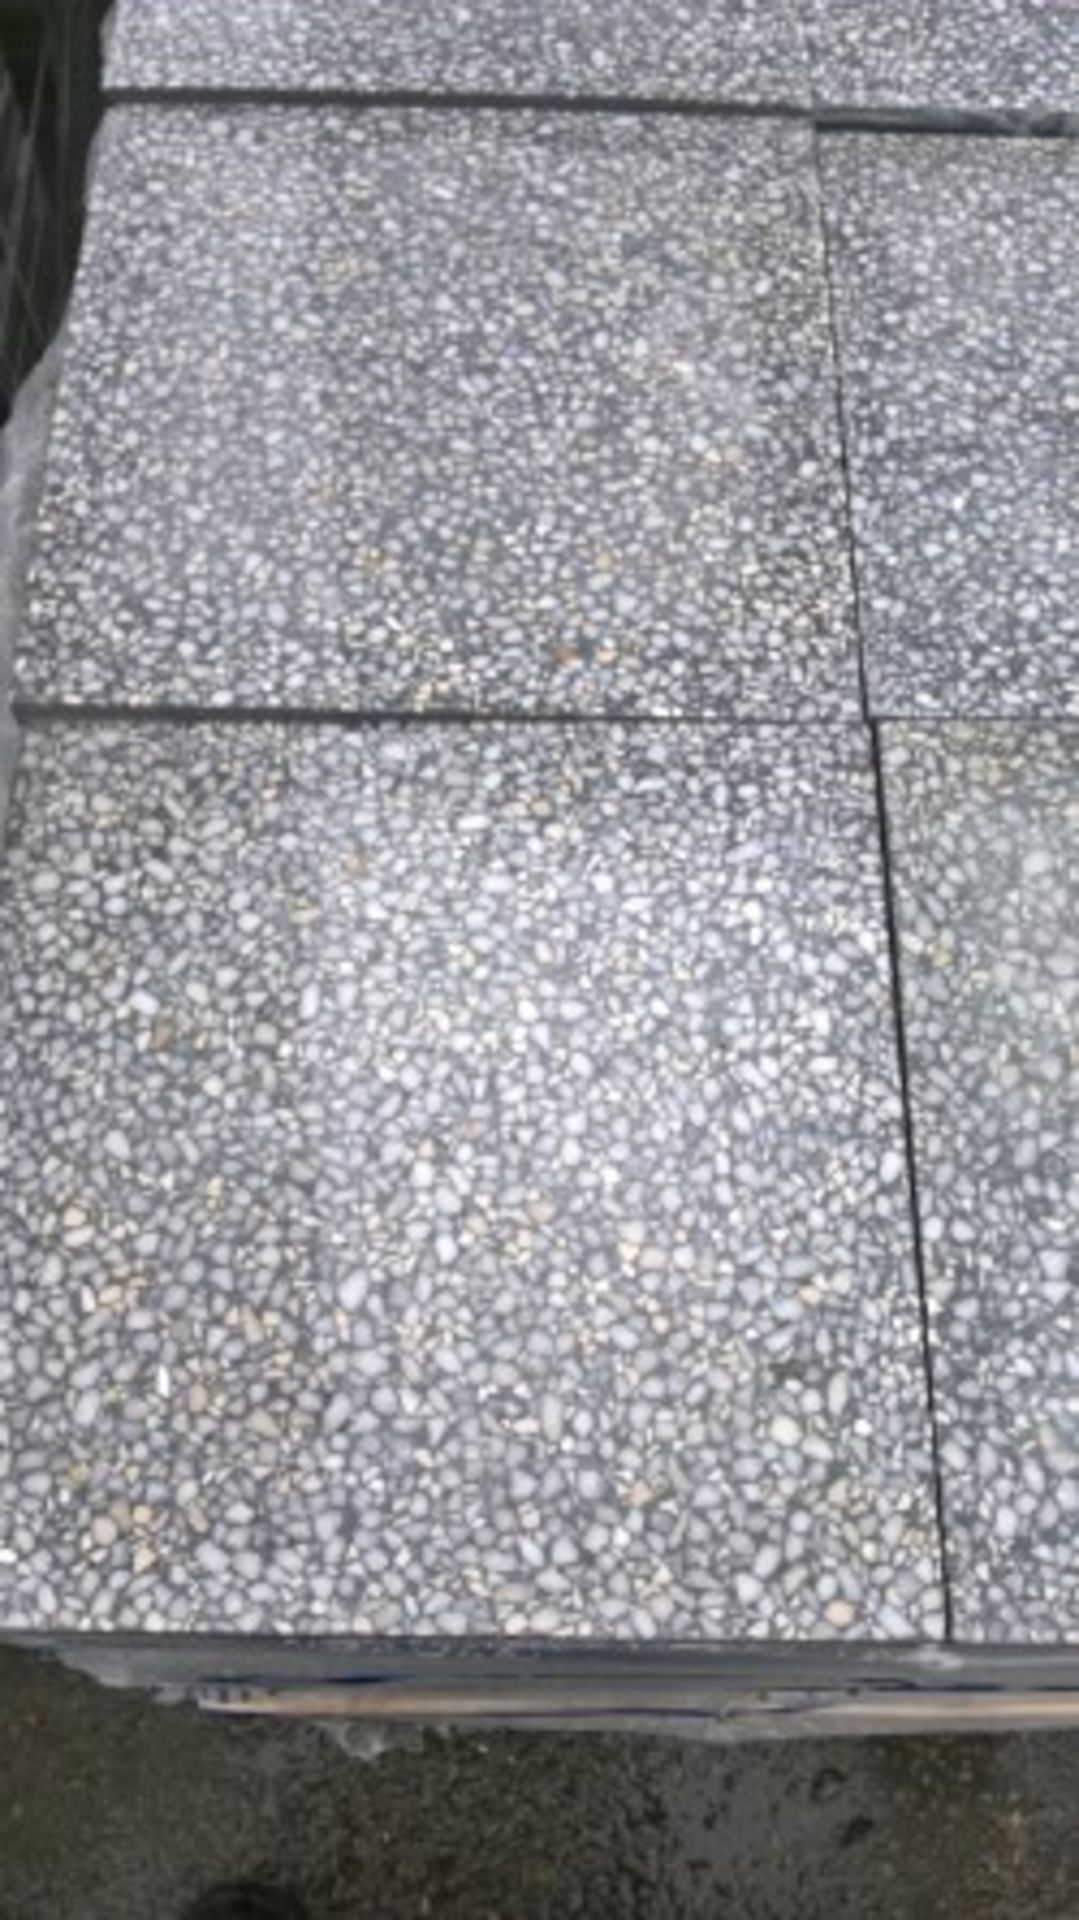 1 x Pallet Quiligotti Terrazzo Commercial Floor Tiles (Z30099) 24 square yards per pallet - Image 3 of 3